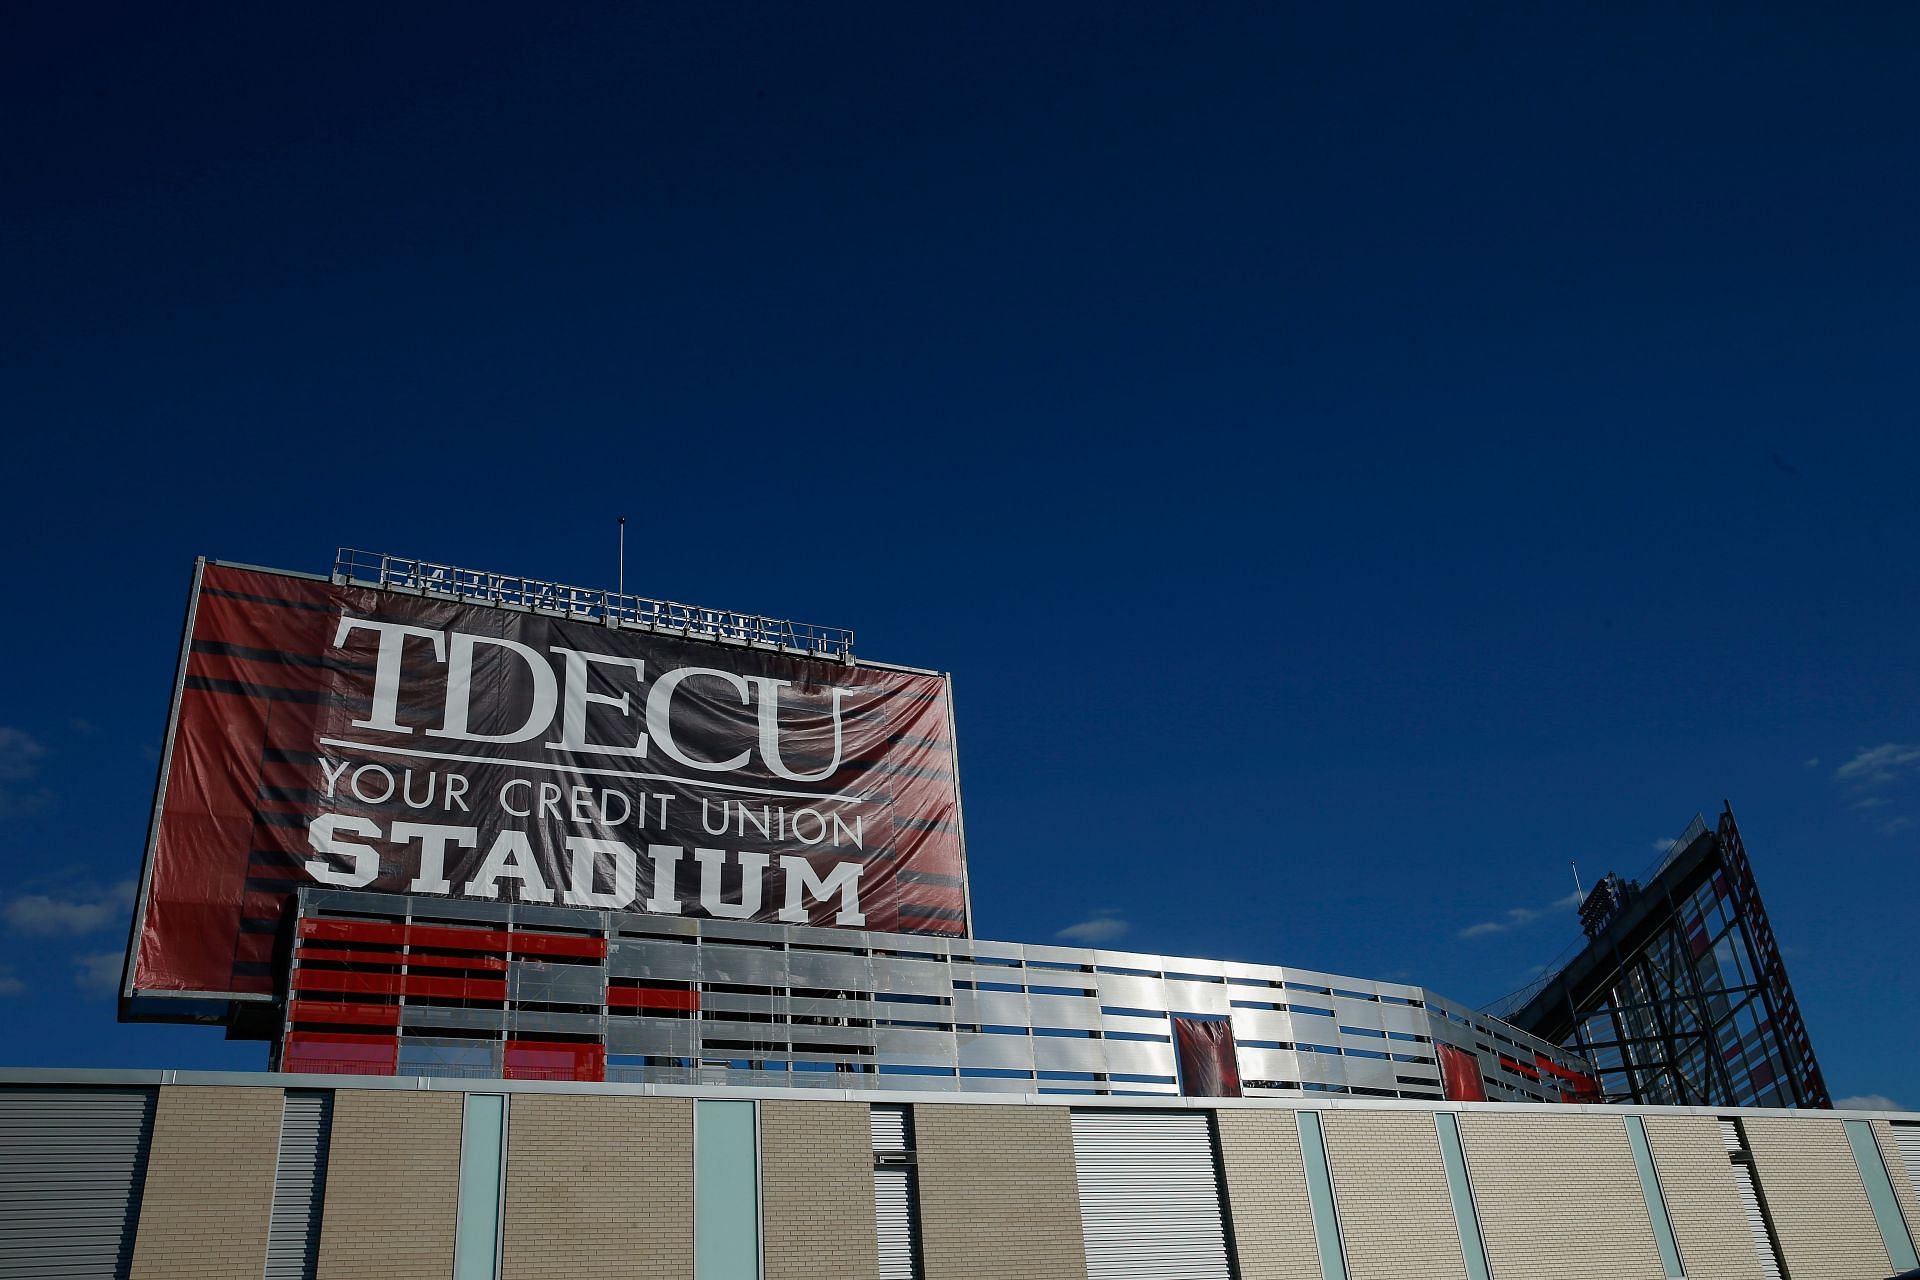 TDECU Stadium will play host to the Houston franchise